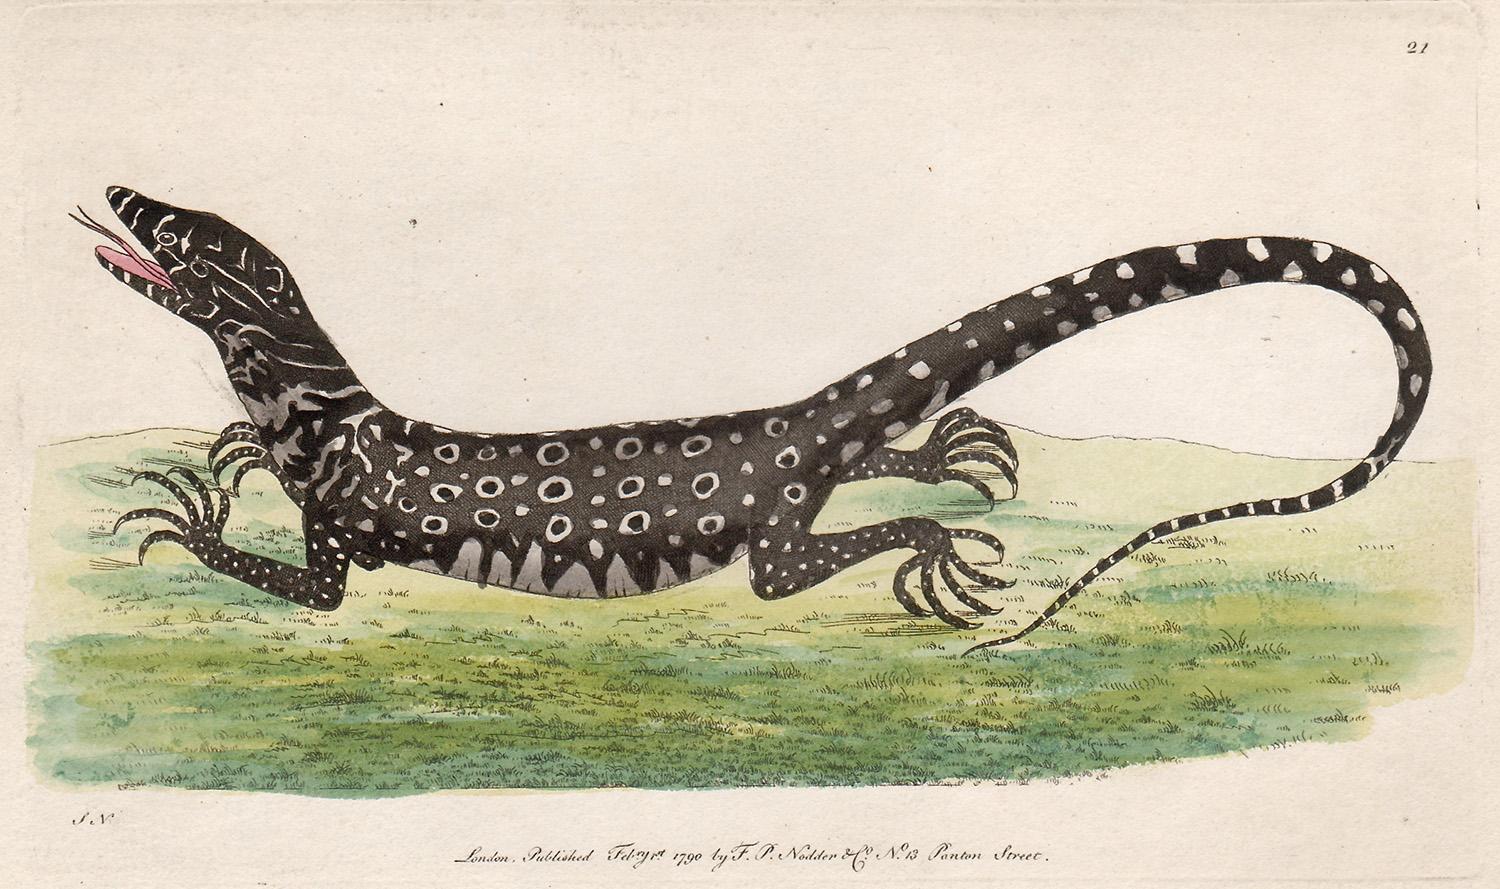 Animal Print Frederick Polydore Nodder - The Monitory Lizard, Australie, gravure avec coloration à la main originale, 1790